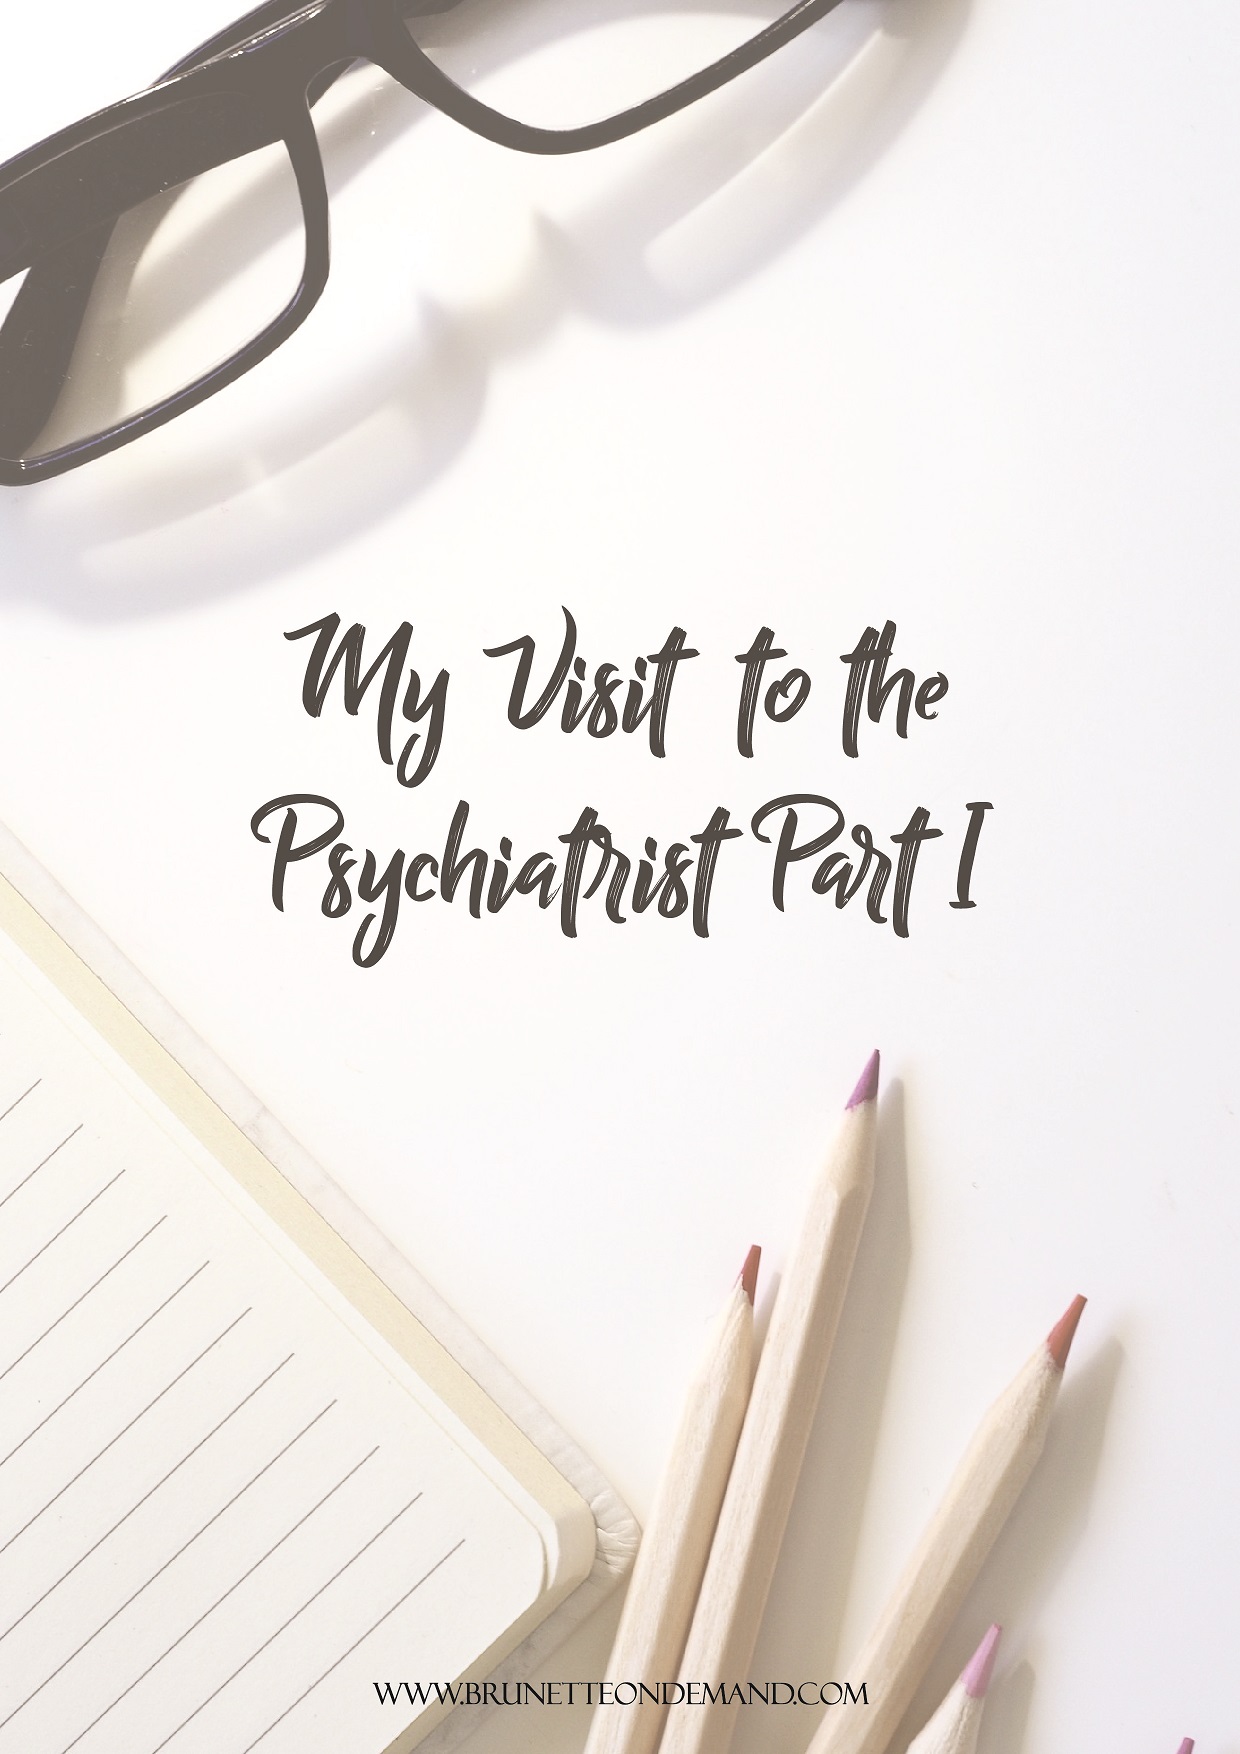 My Visit To The Psychiatrist Part I